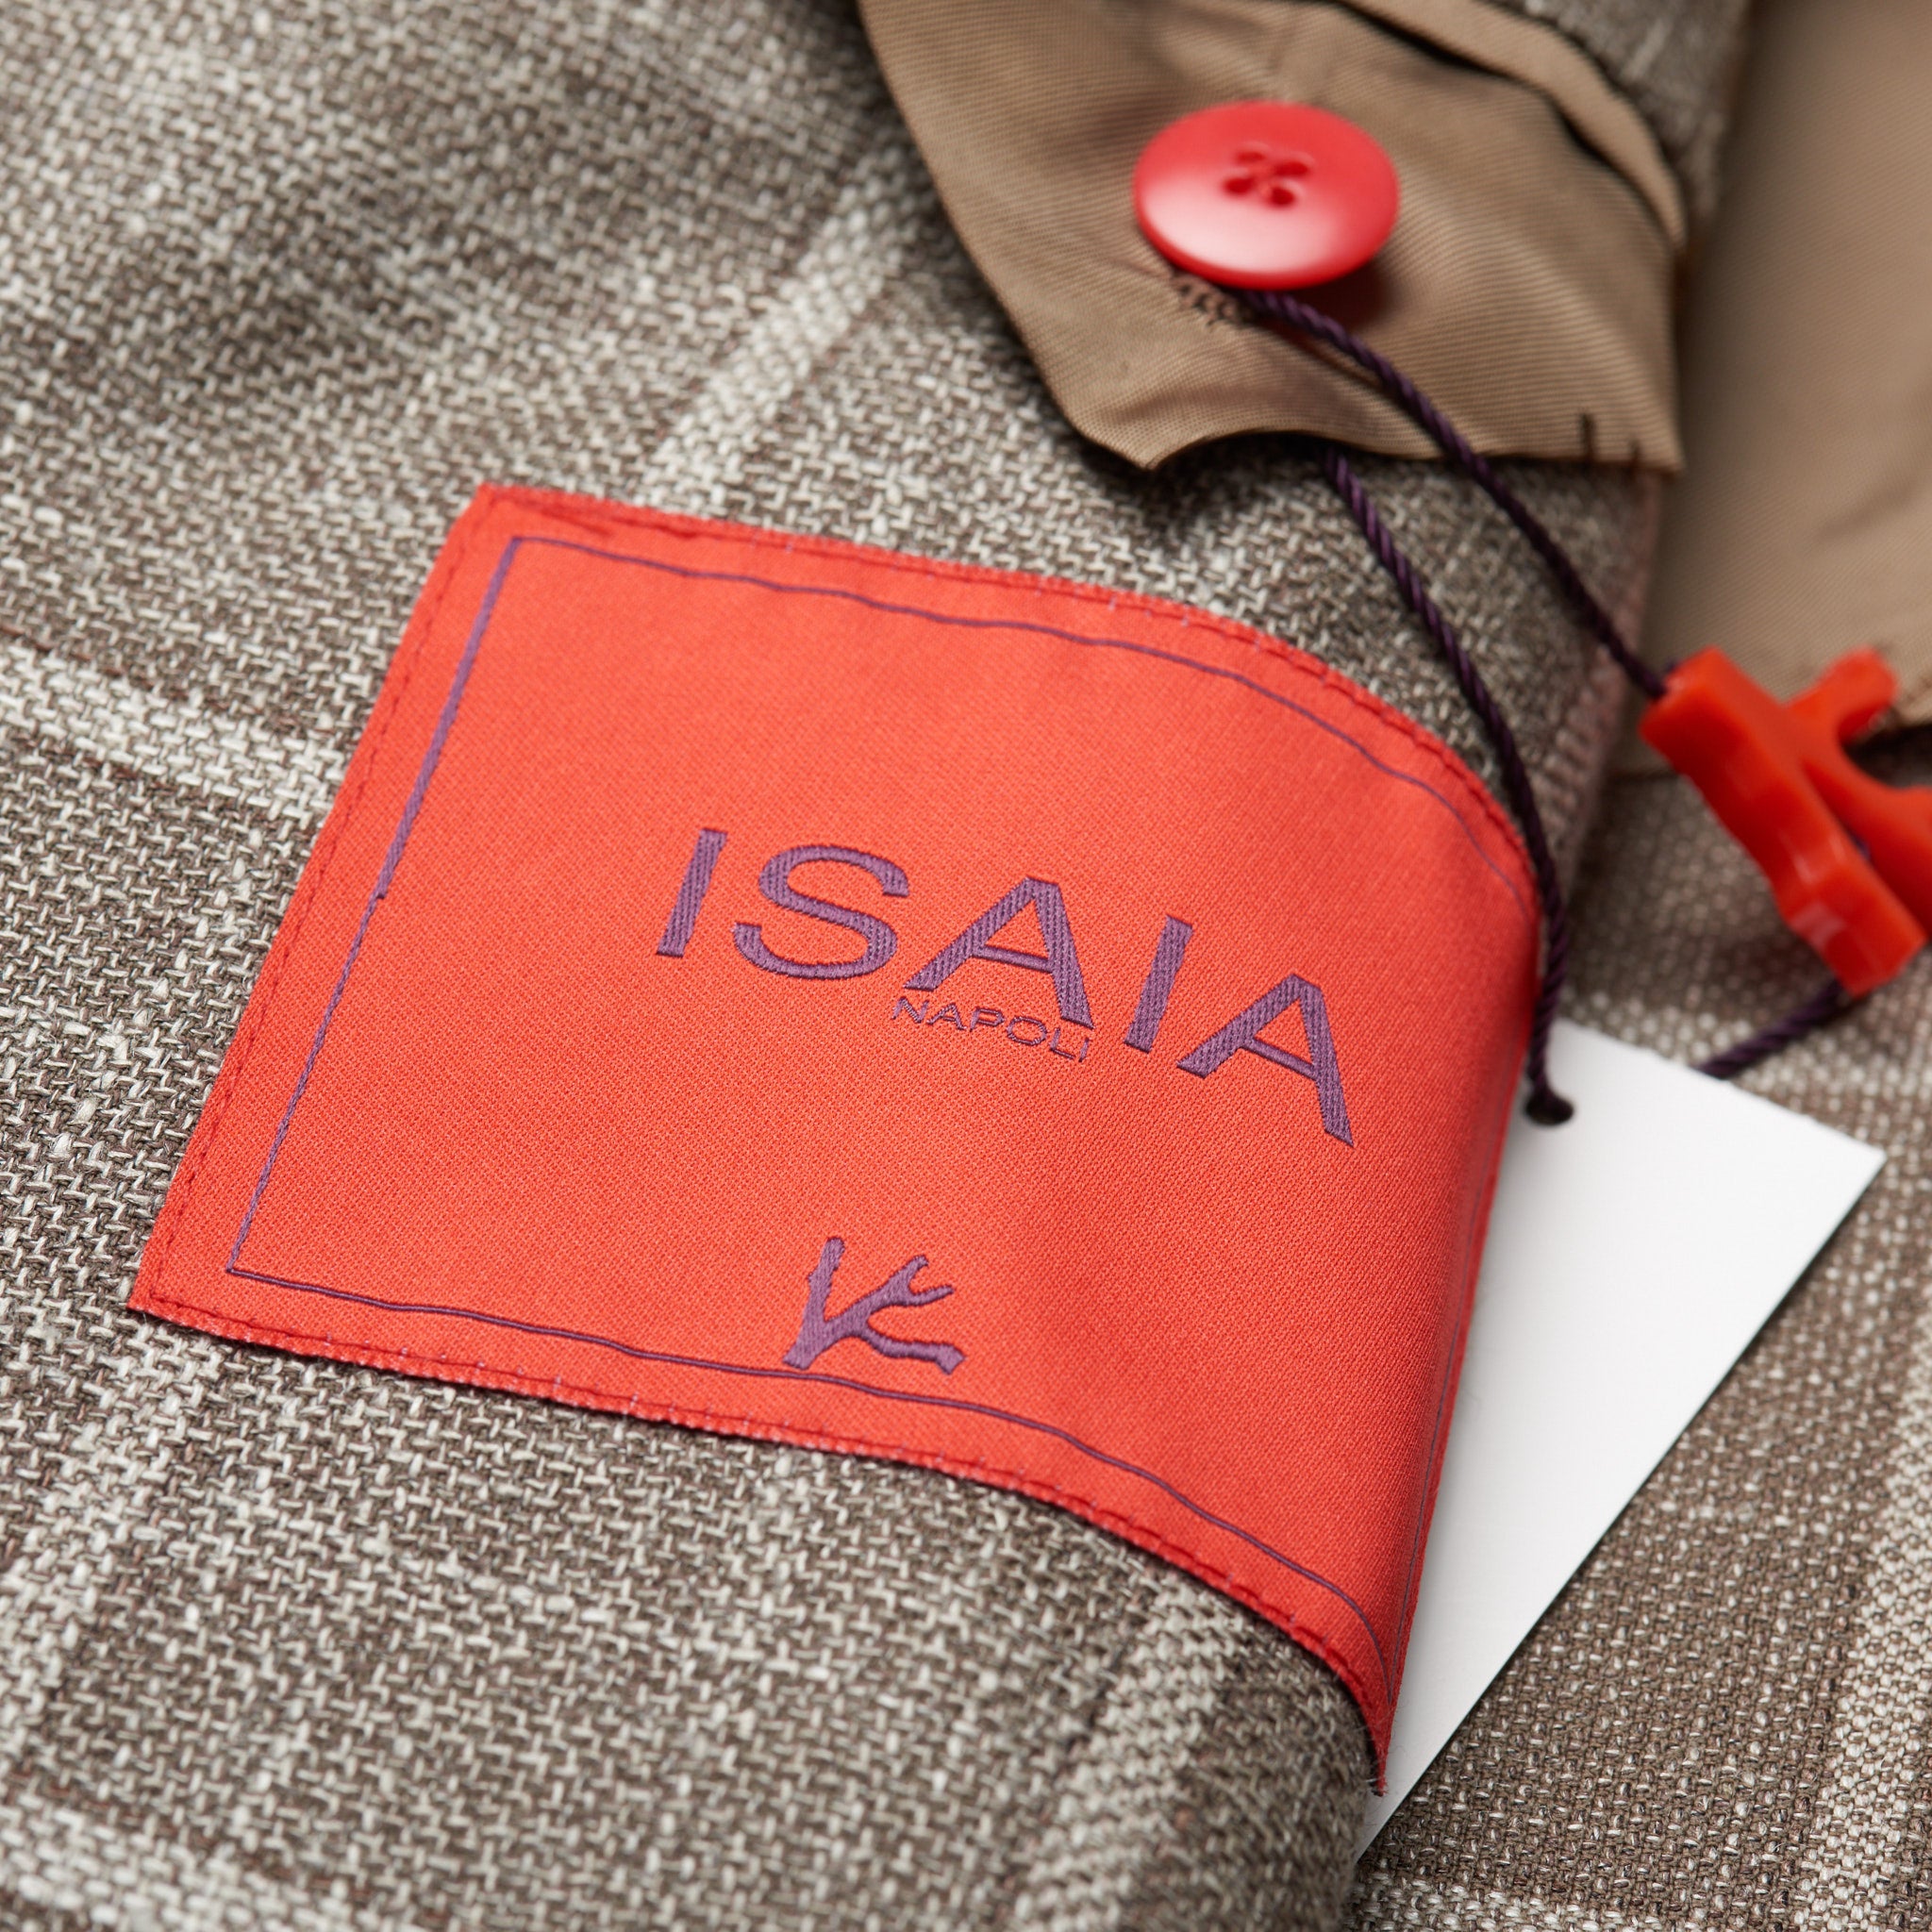 ISAIA Napoli "Cortina" Taupe Gray Plaid Wool-Silk-Linen Hopsack Jacket 46 NEW 36